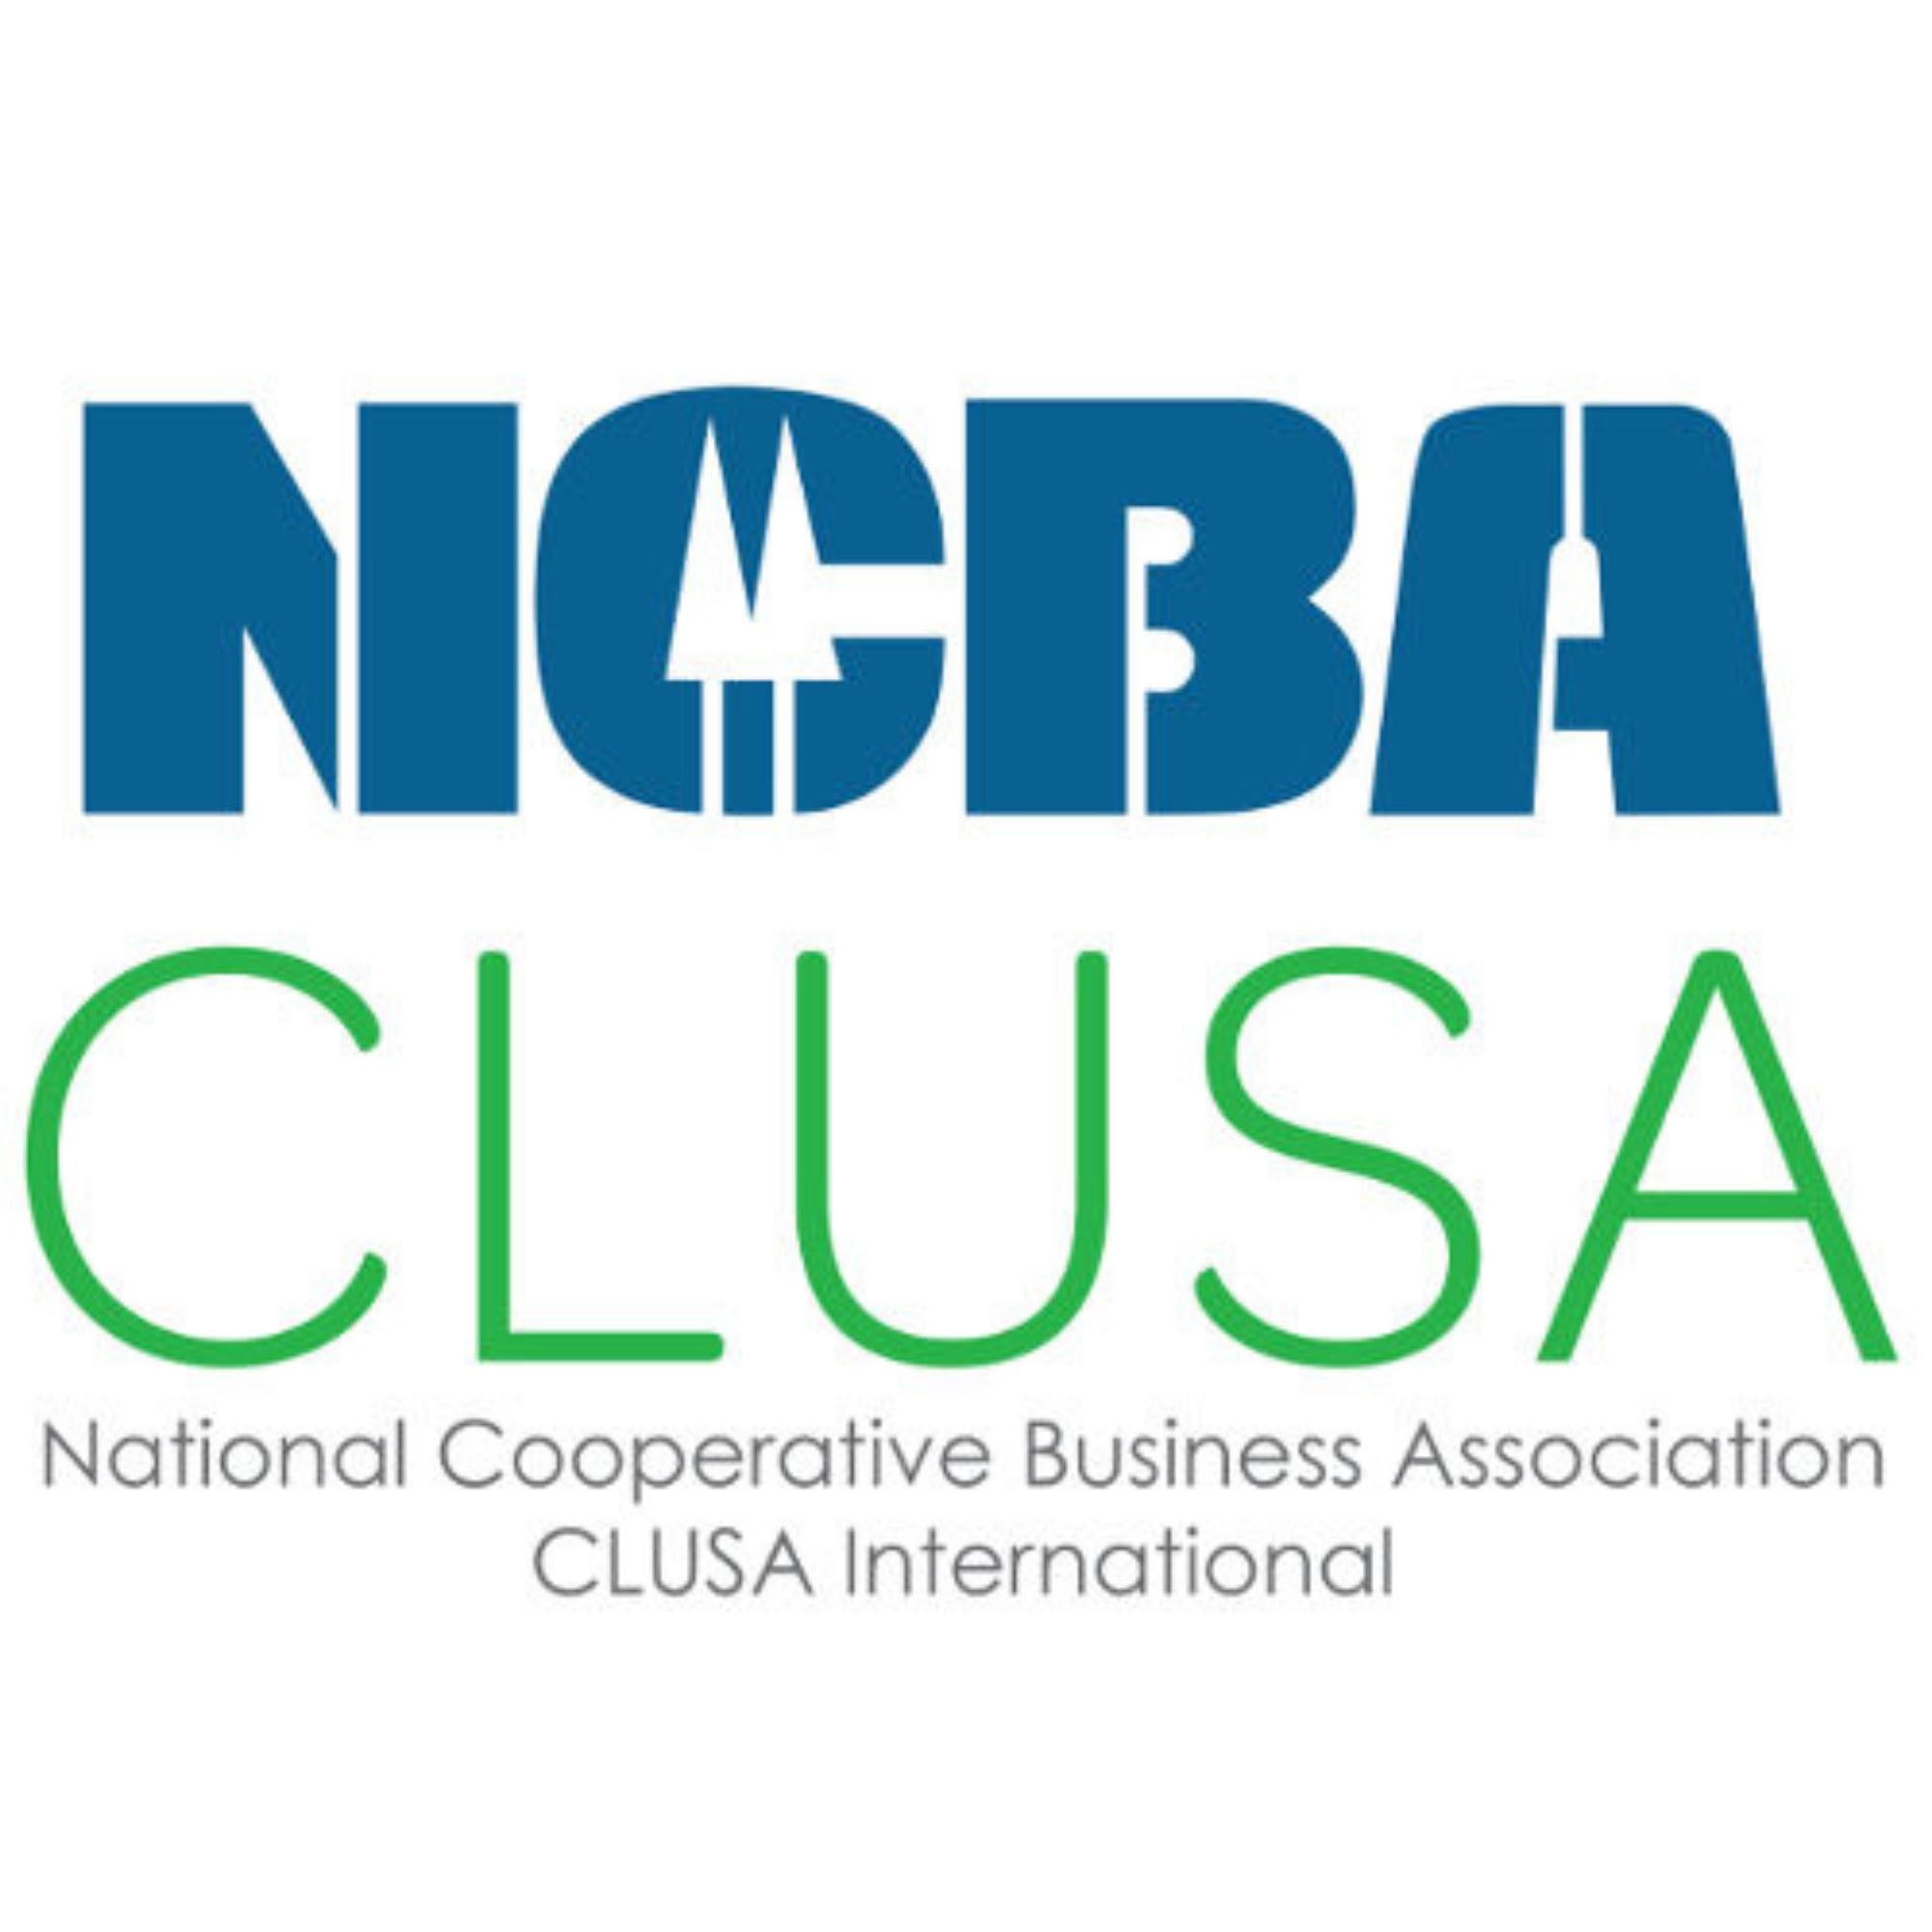 THE NATIONAL COOPERATIVE BUSINESS ASSOCIATION - CLUSA INTERNATIONAL